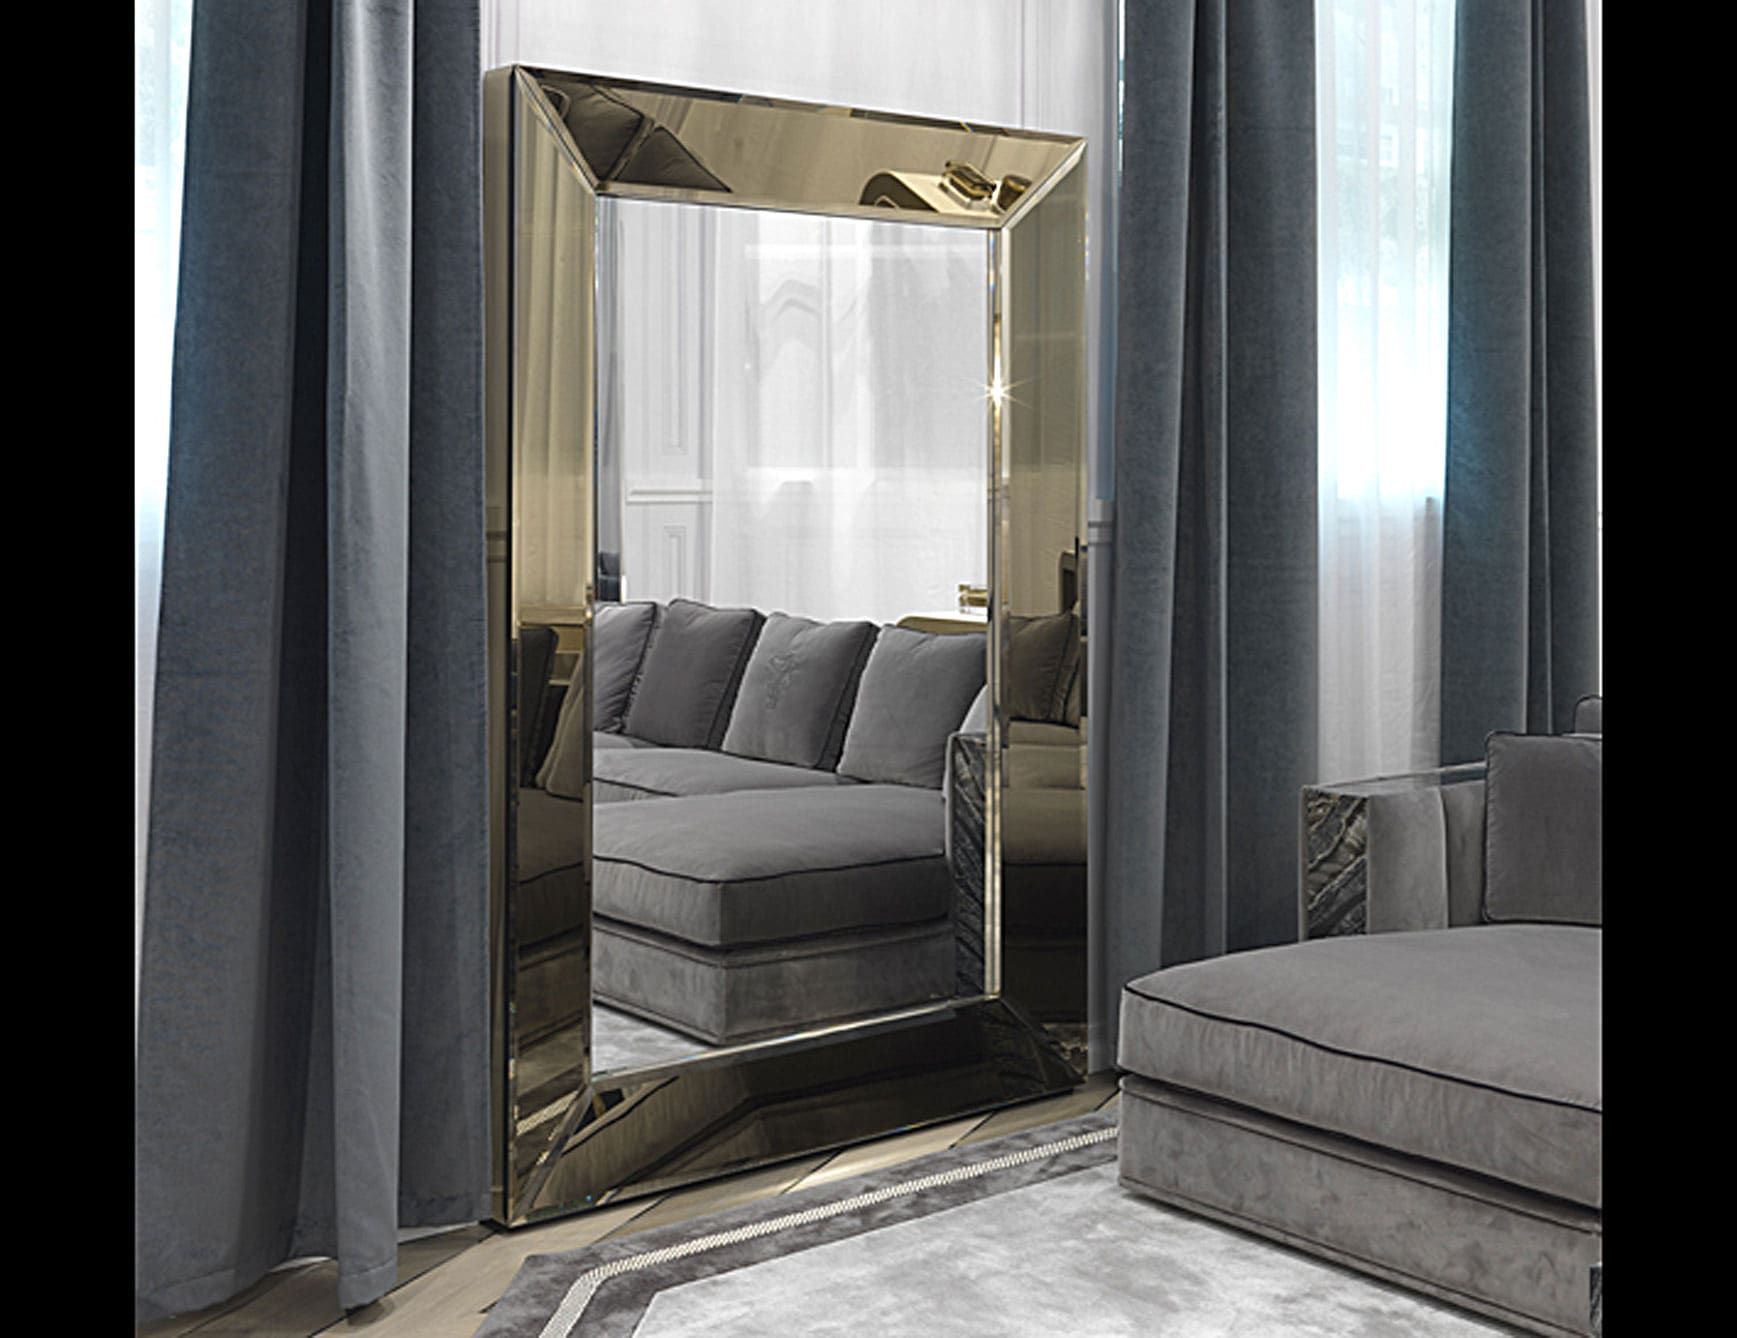 Talos modern luxury mirror with bronze metal